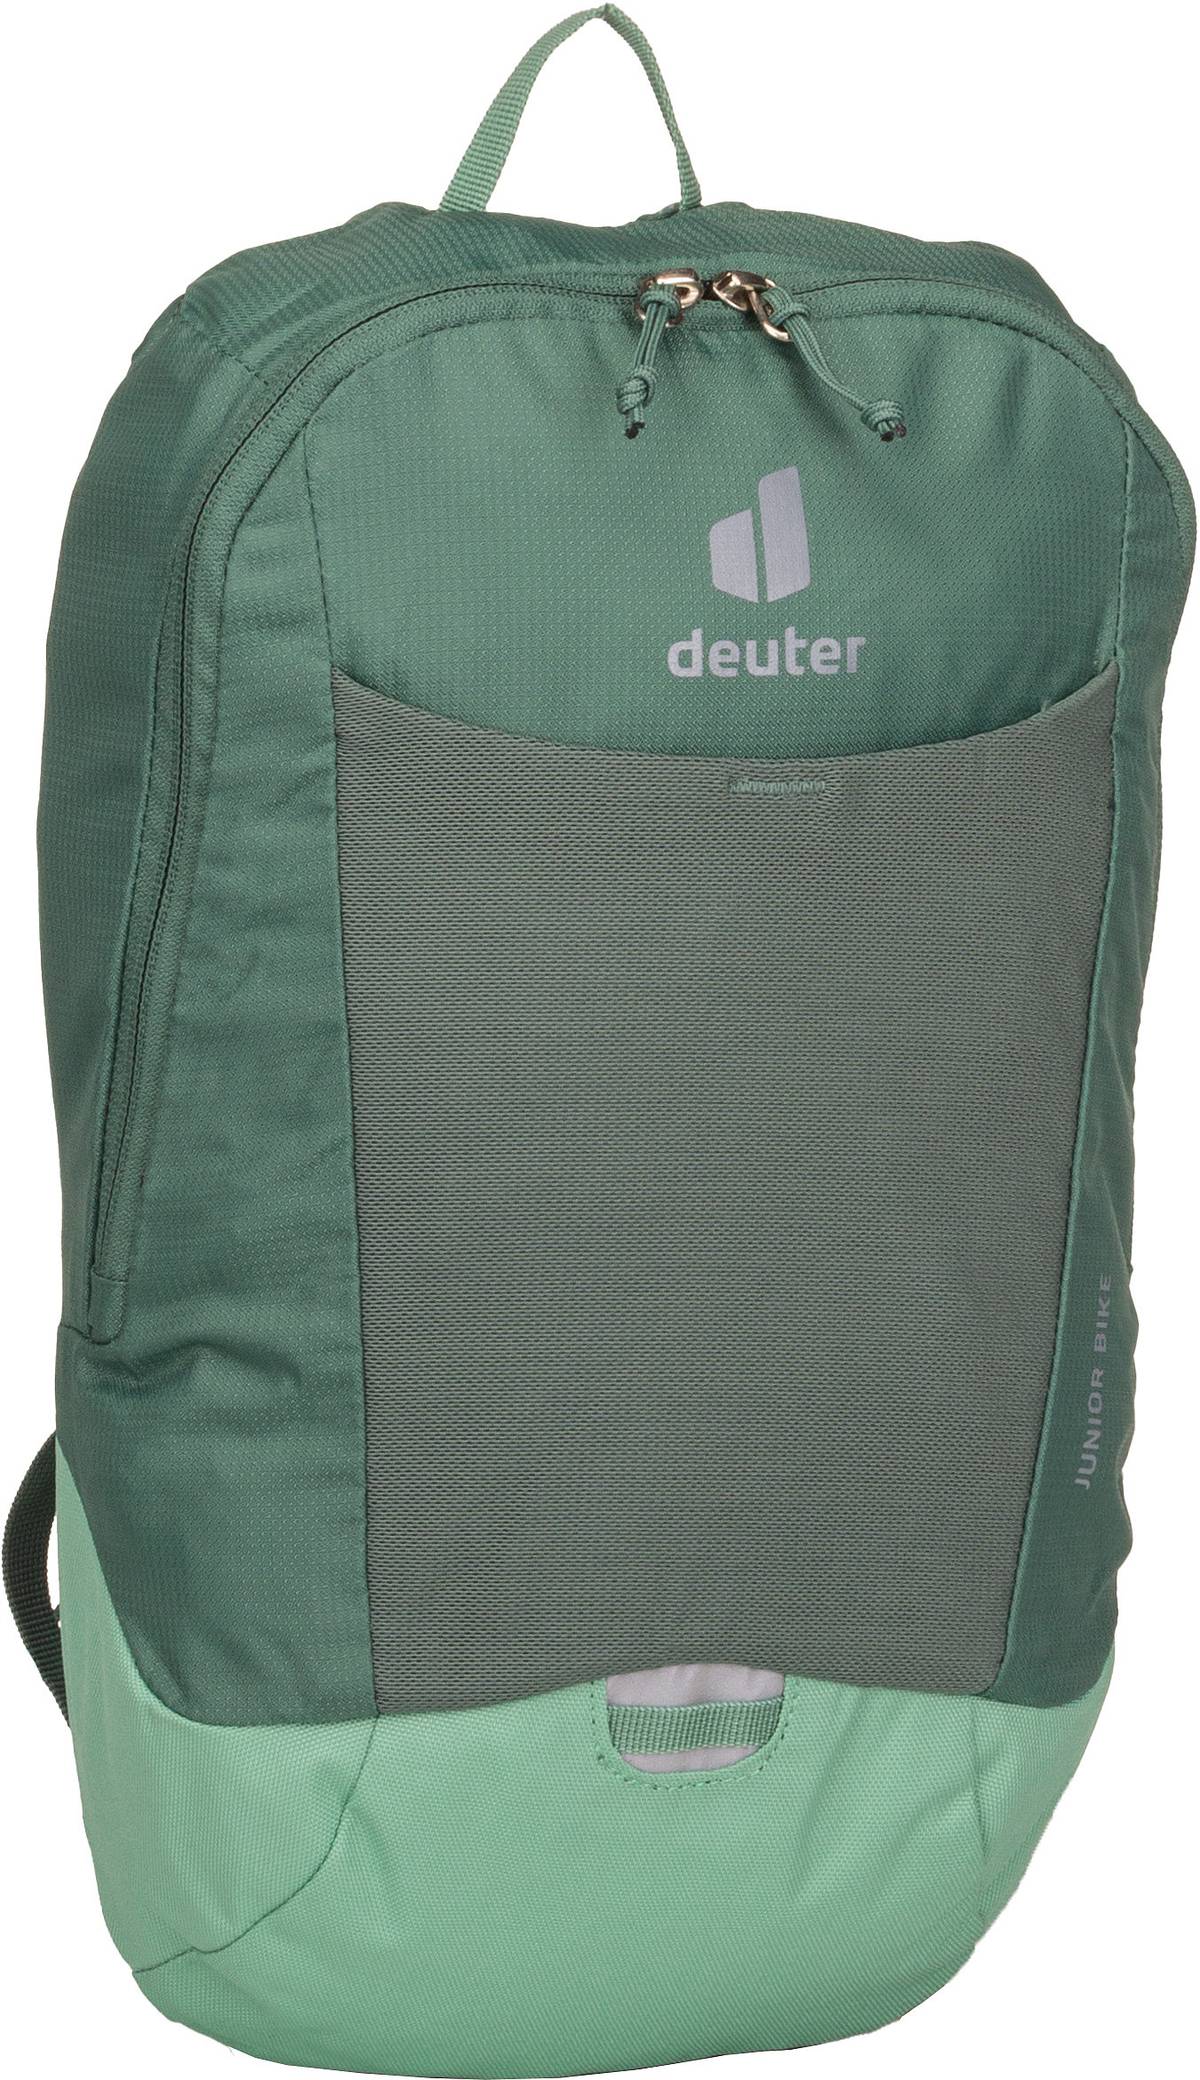 Deuter Deuter Junior Bike in Grün (8 Liter), Rucksack / Backpack